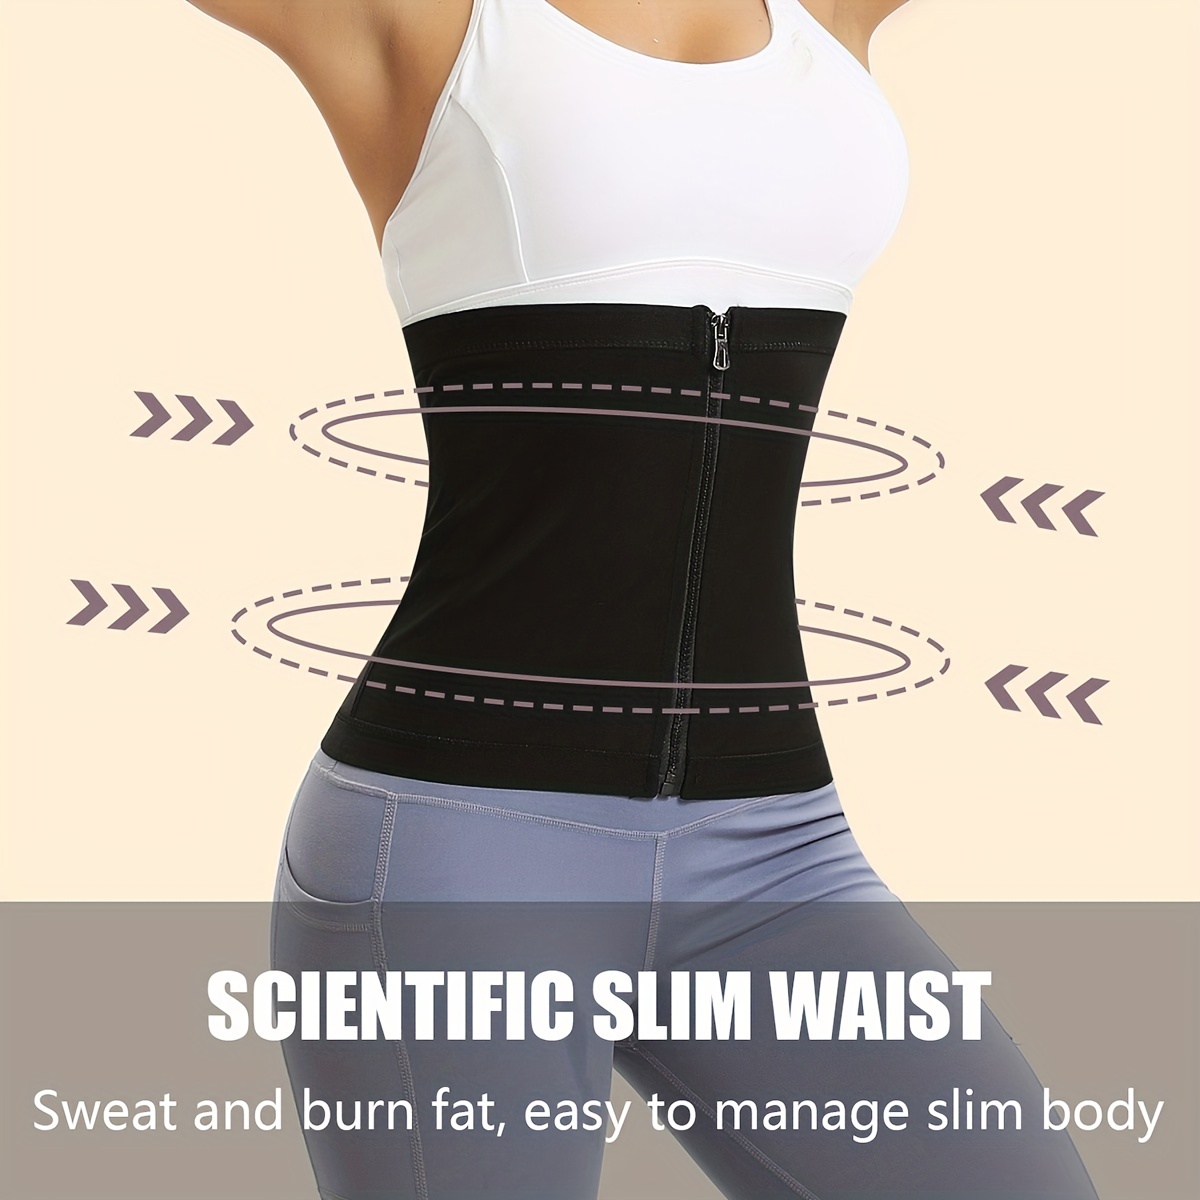 Women Body Shaper Abdomen Reducer Fitness Sweat Trimmer Belt Suana